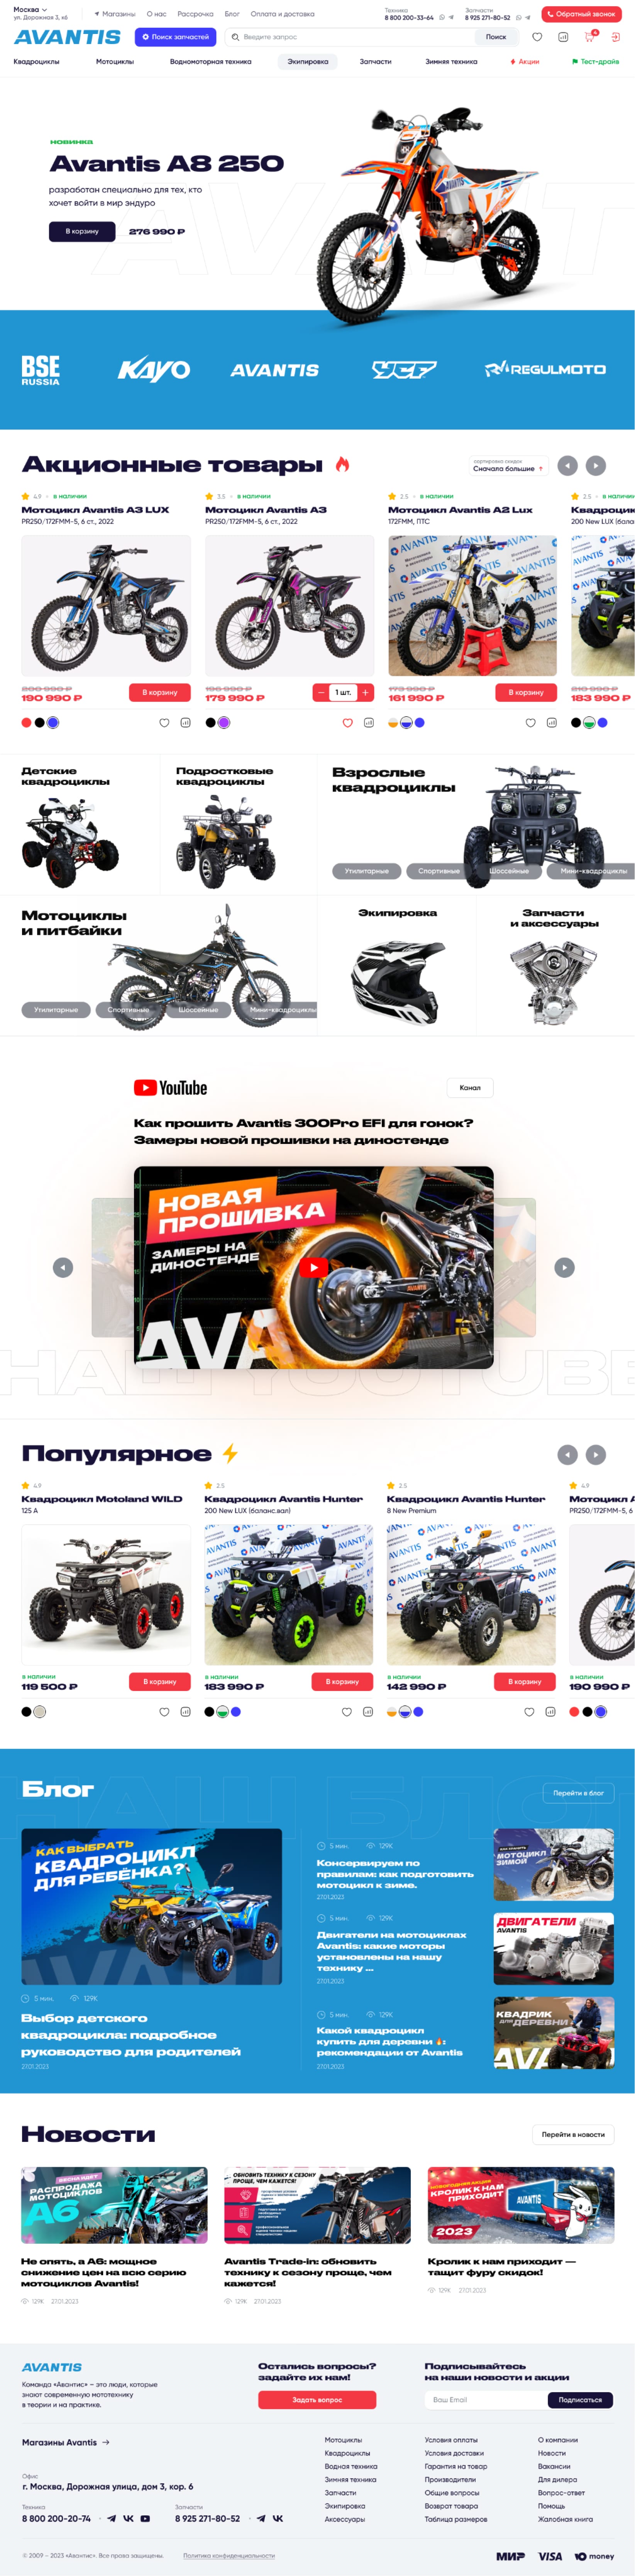 Авантис. Мотоциклы и техника. Itdigital.pro. Главная страница